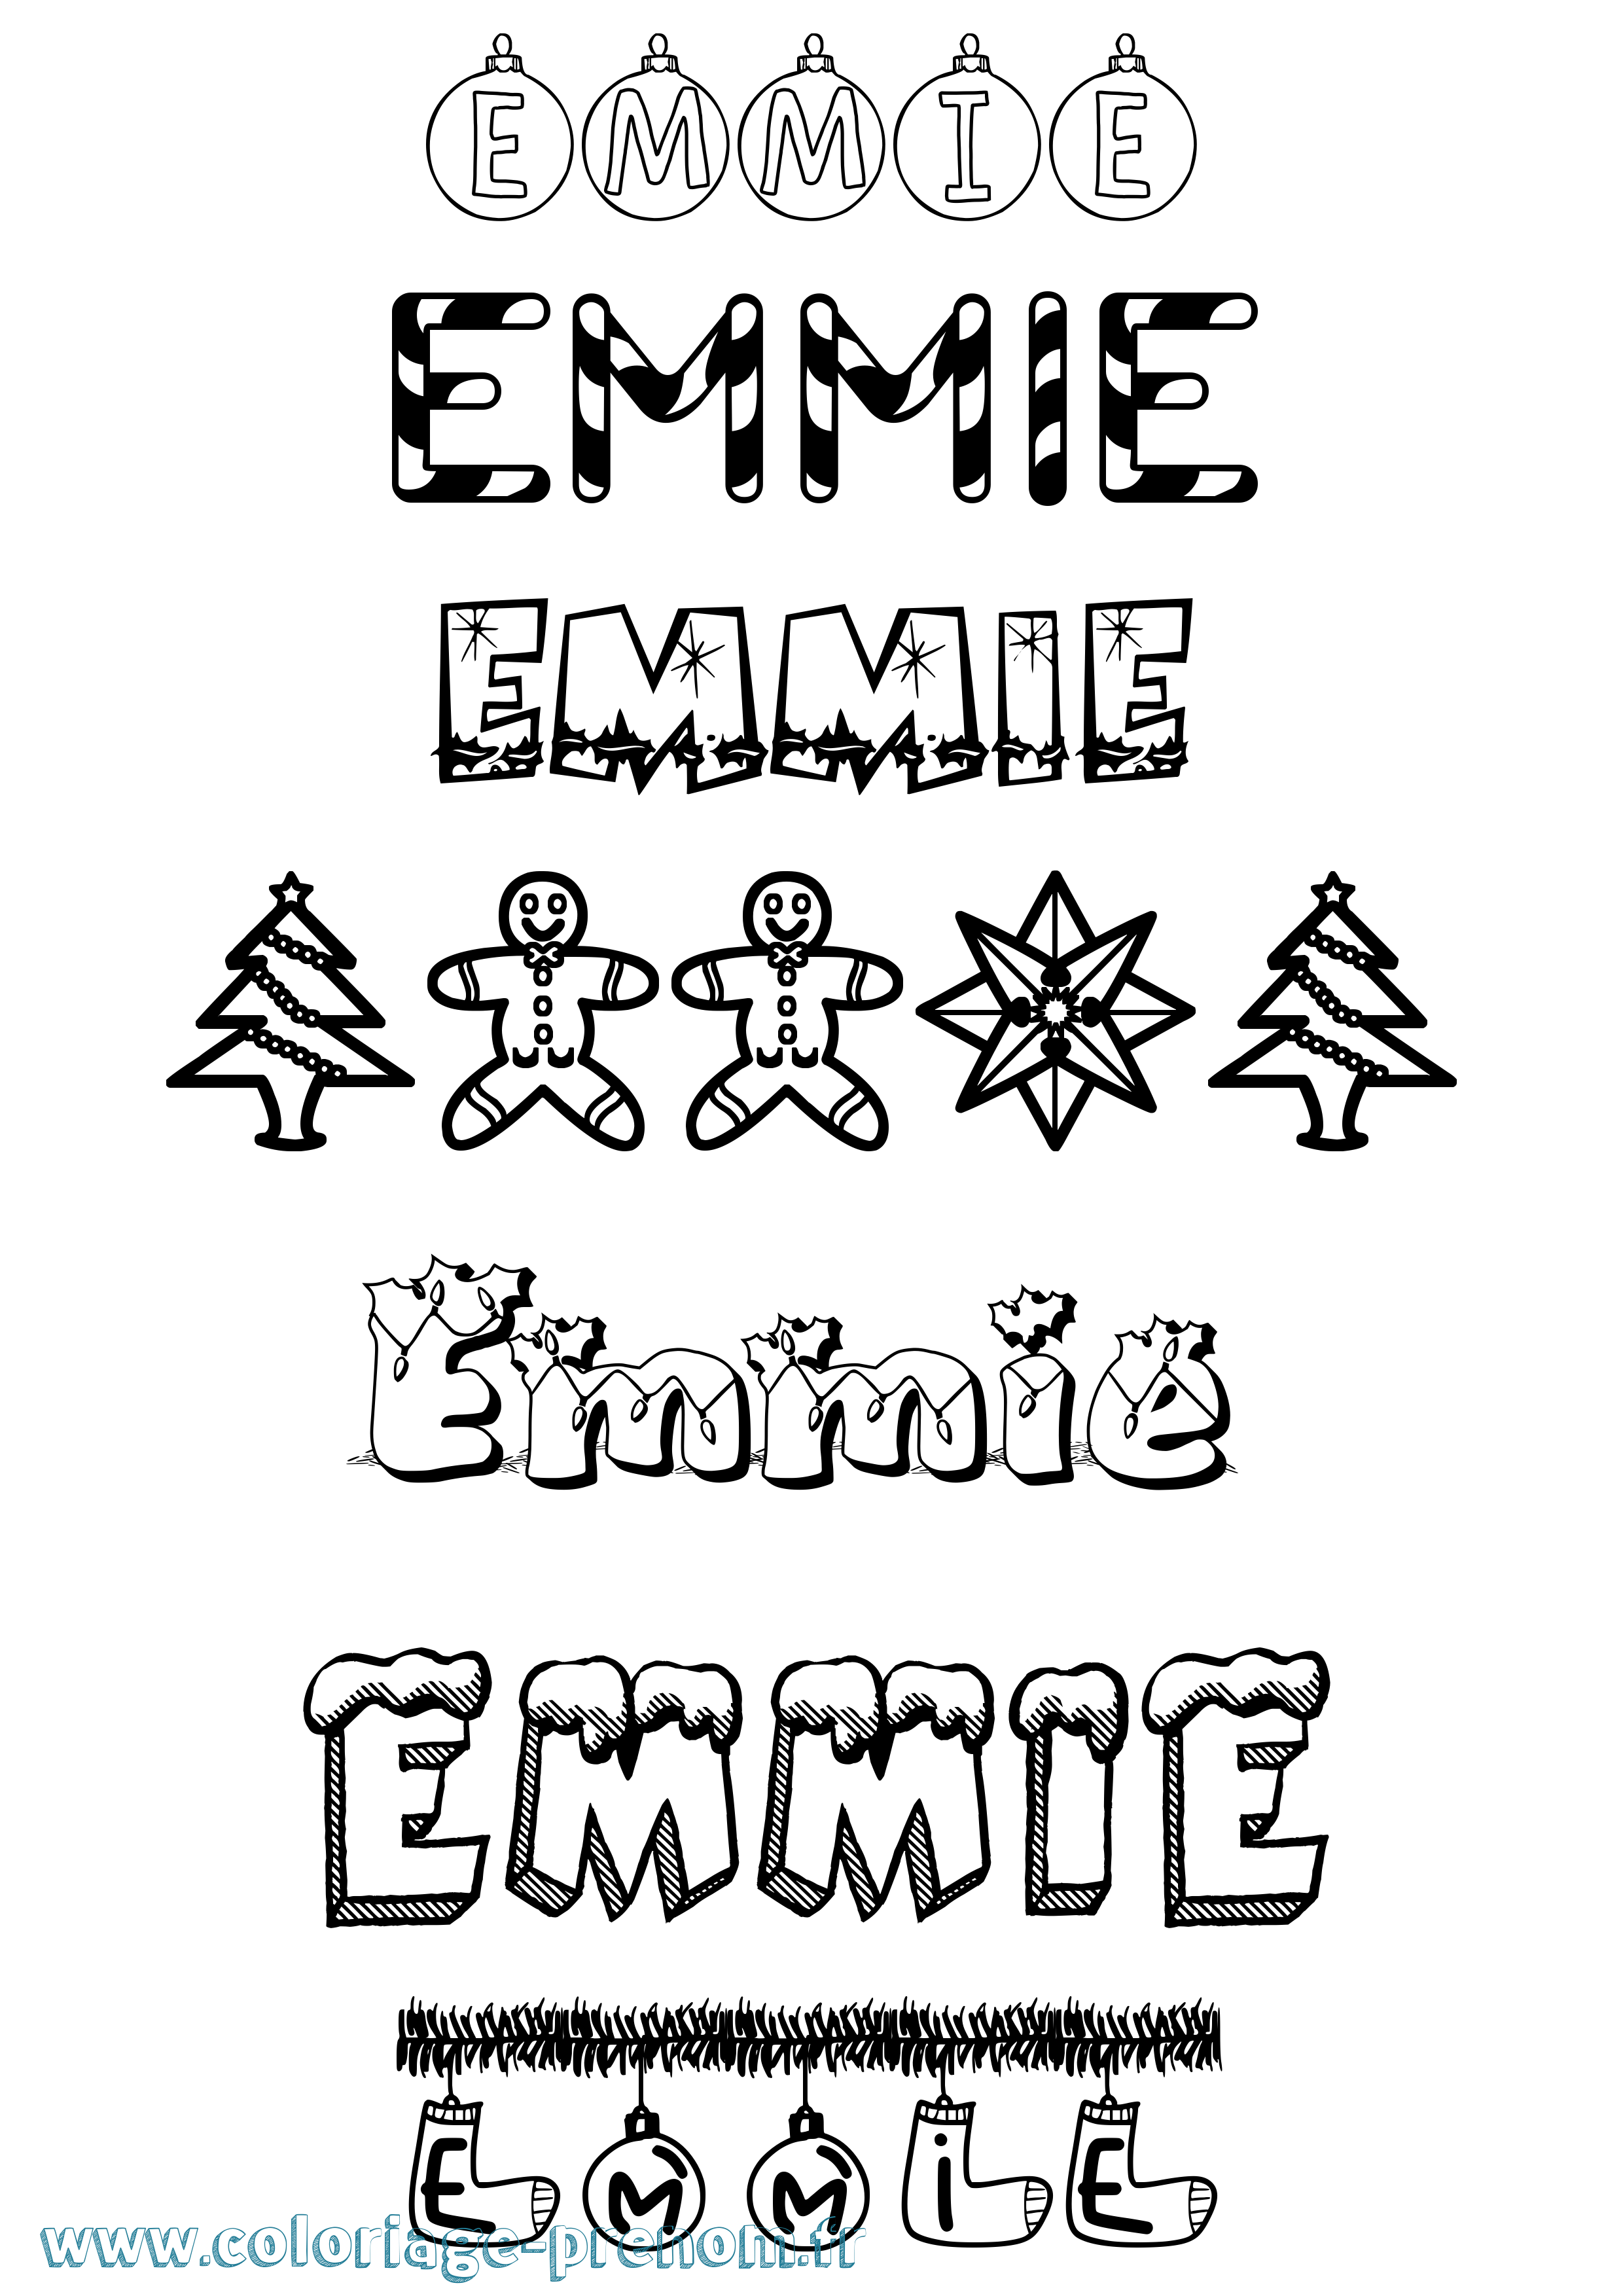 Coloriage prénom Emmie